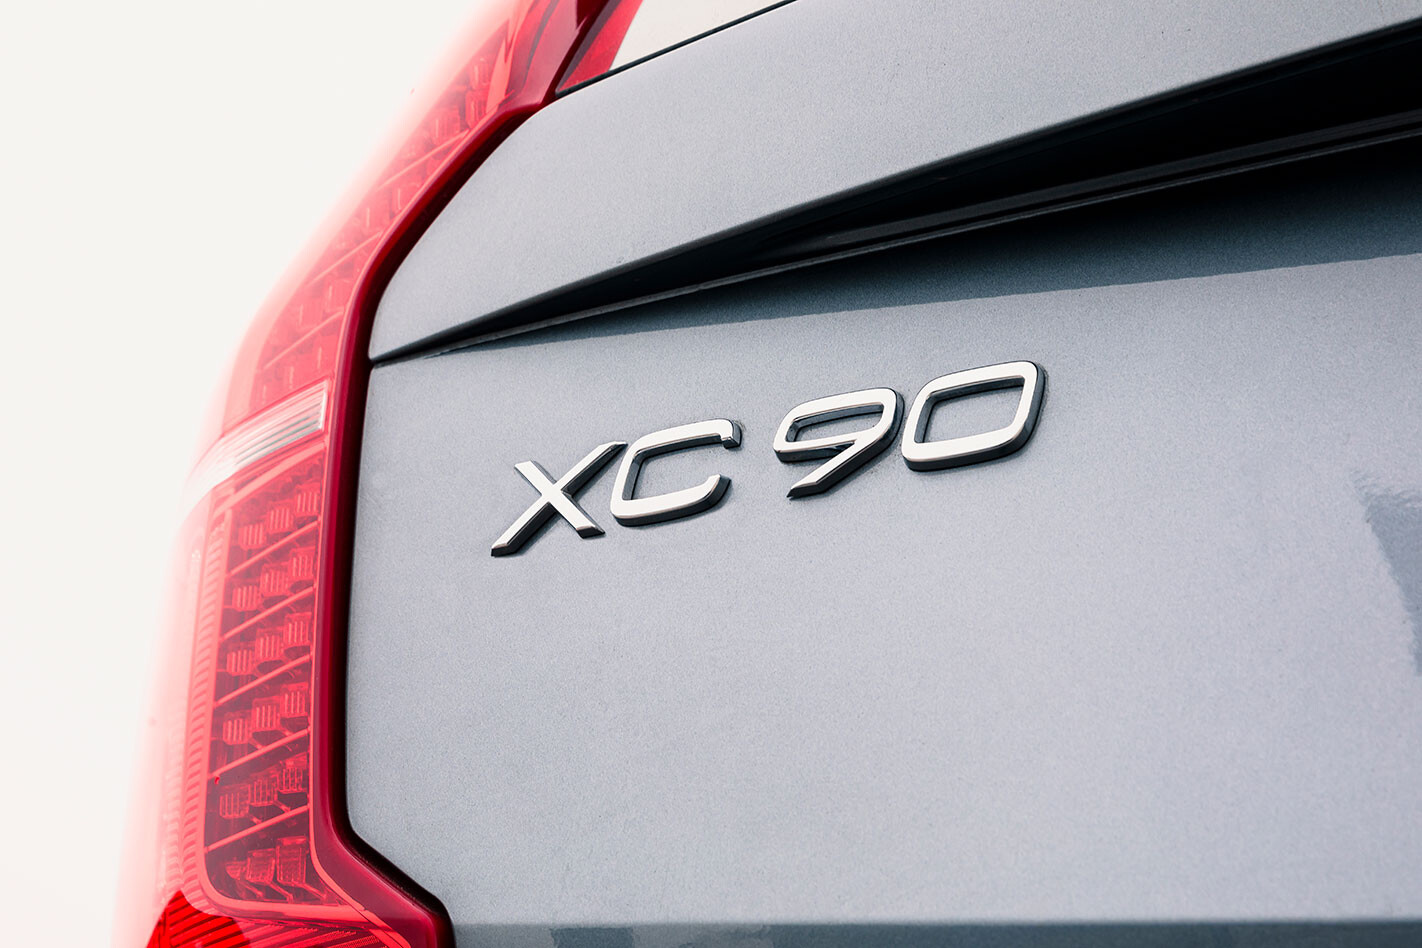 Volvo slashes prices of XC90 large SUV